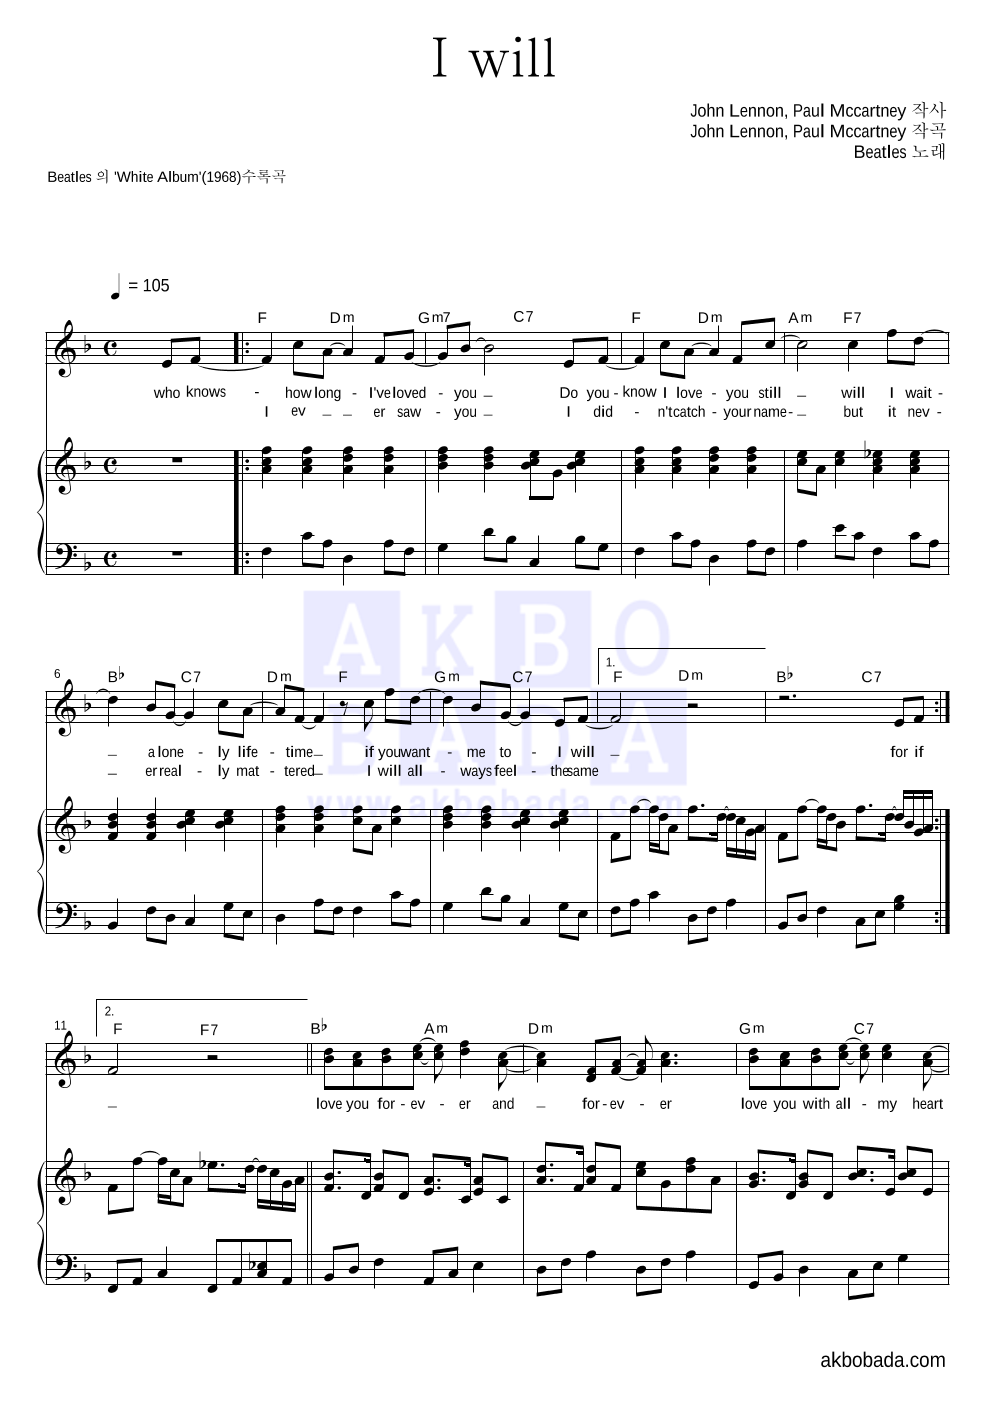 Beatles - I Will 피아노 3단 악보 